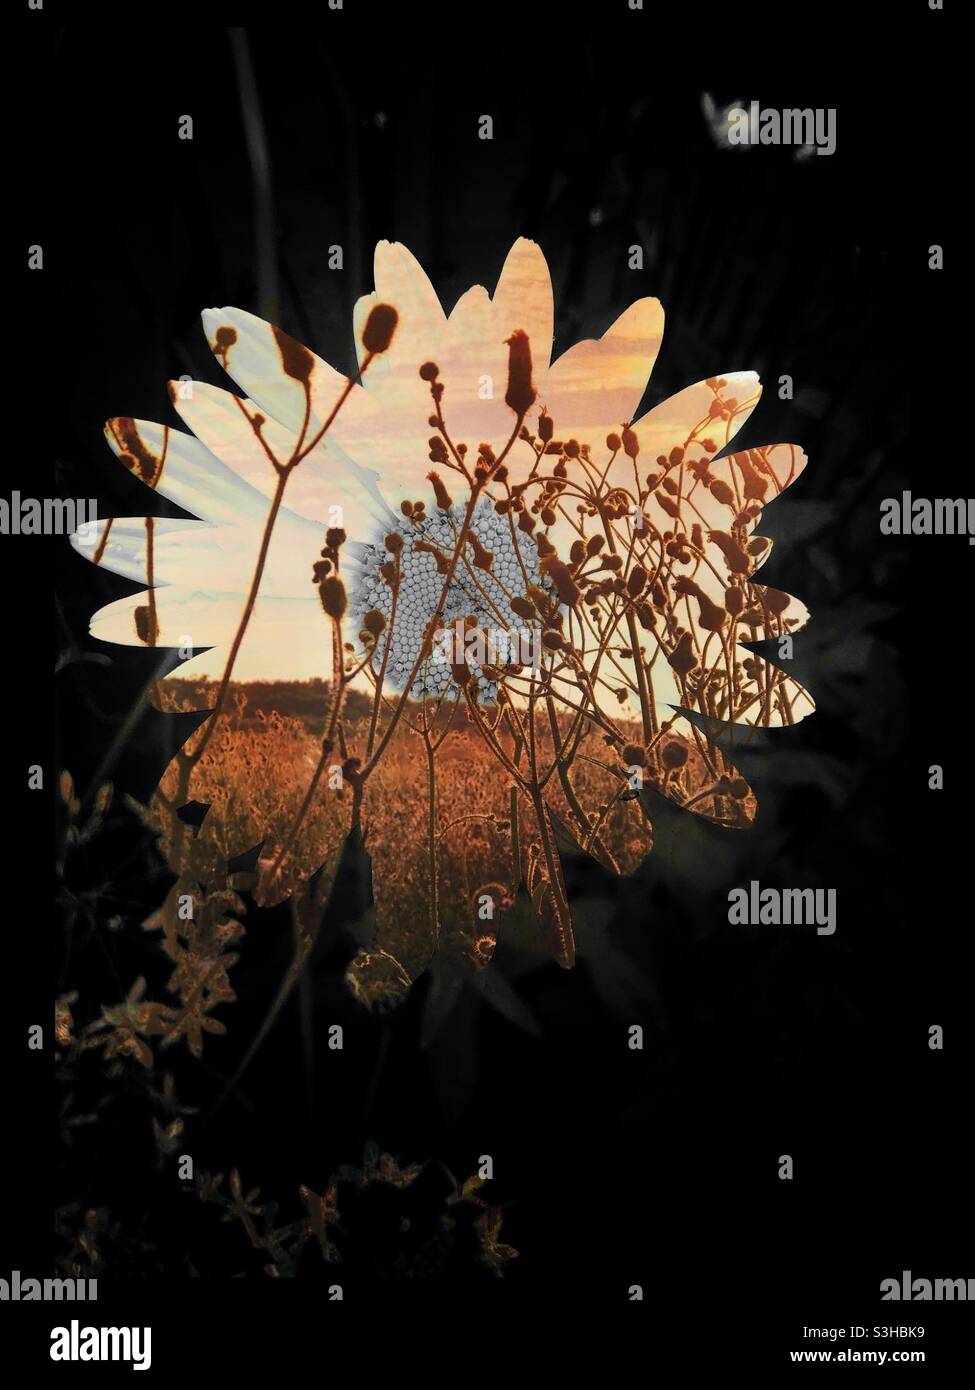 Double exposure - daisy and sunset Stock Photo